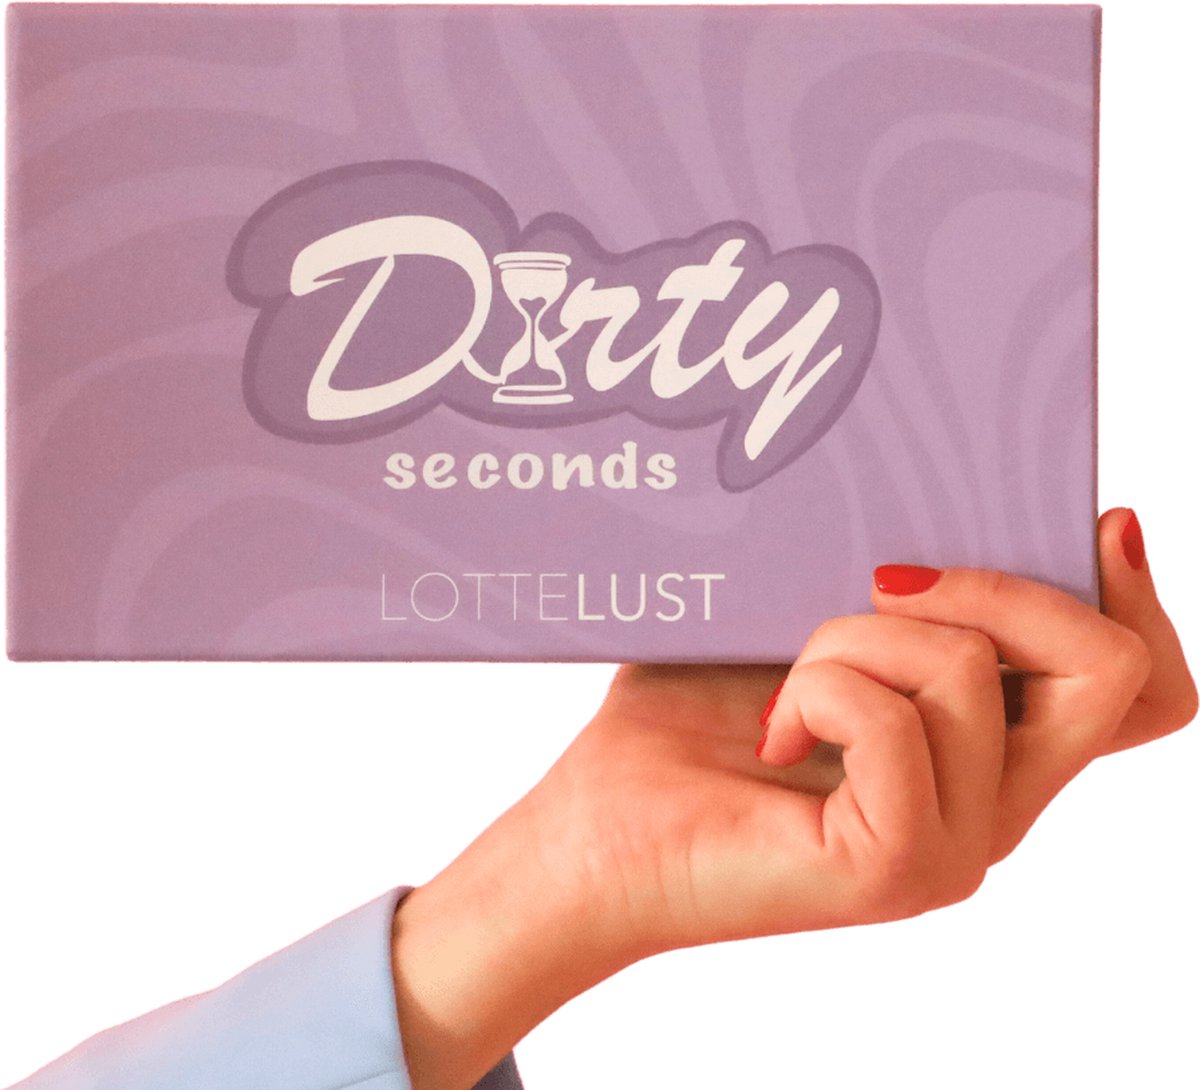 Dirty Seconds - LotteLust